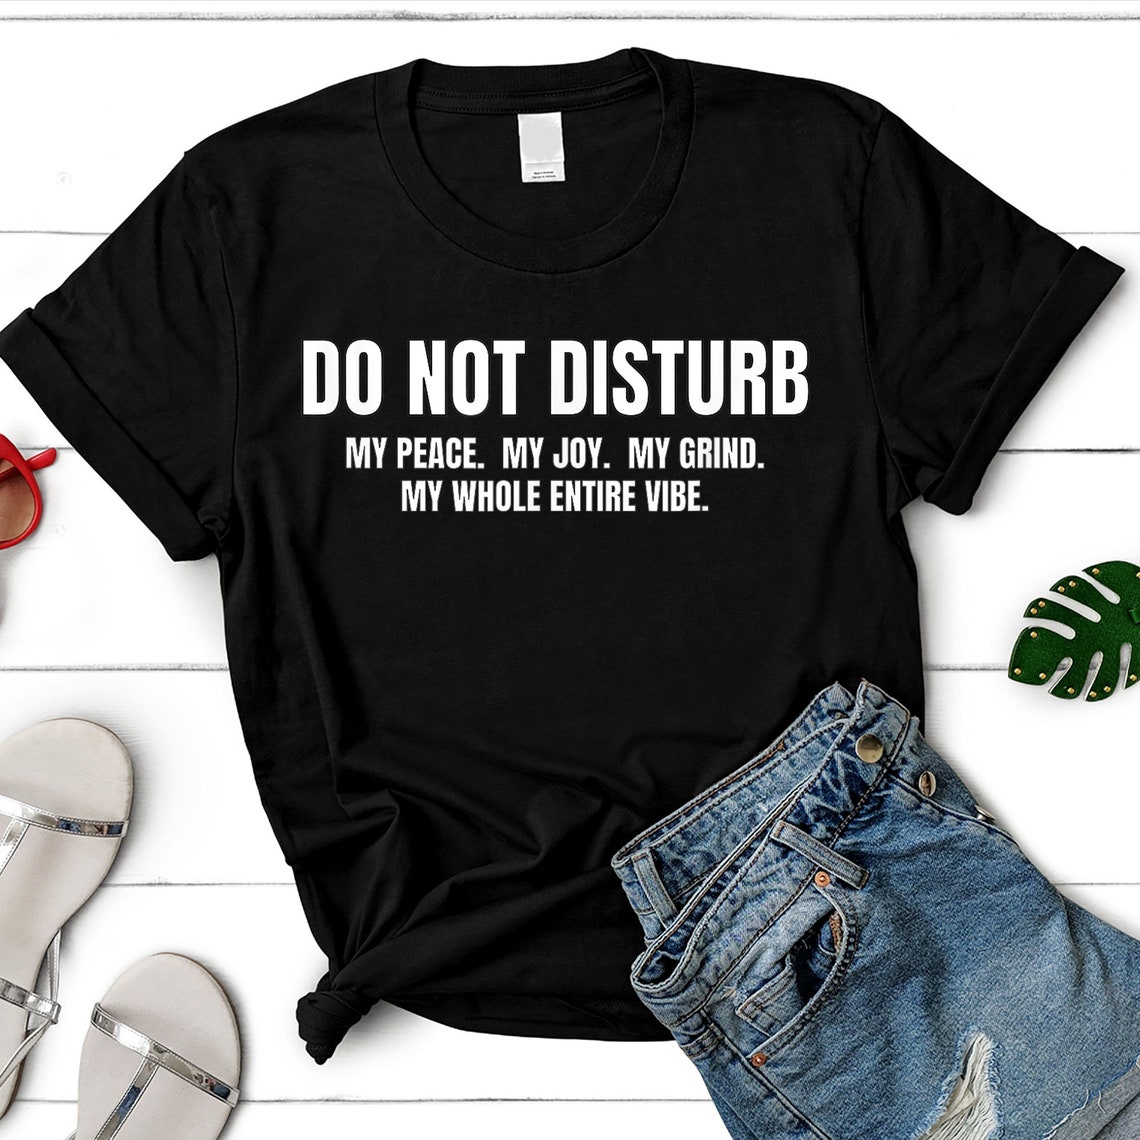 Do Not Disturb T-Shirt / My Peace / Entire Vibe / Likes Mental | Etsy